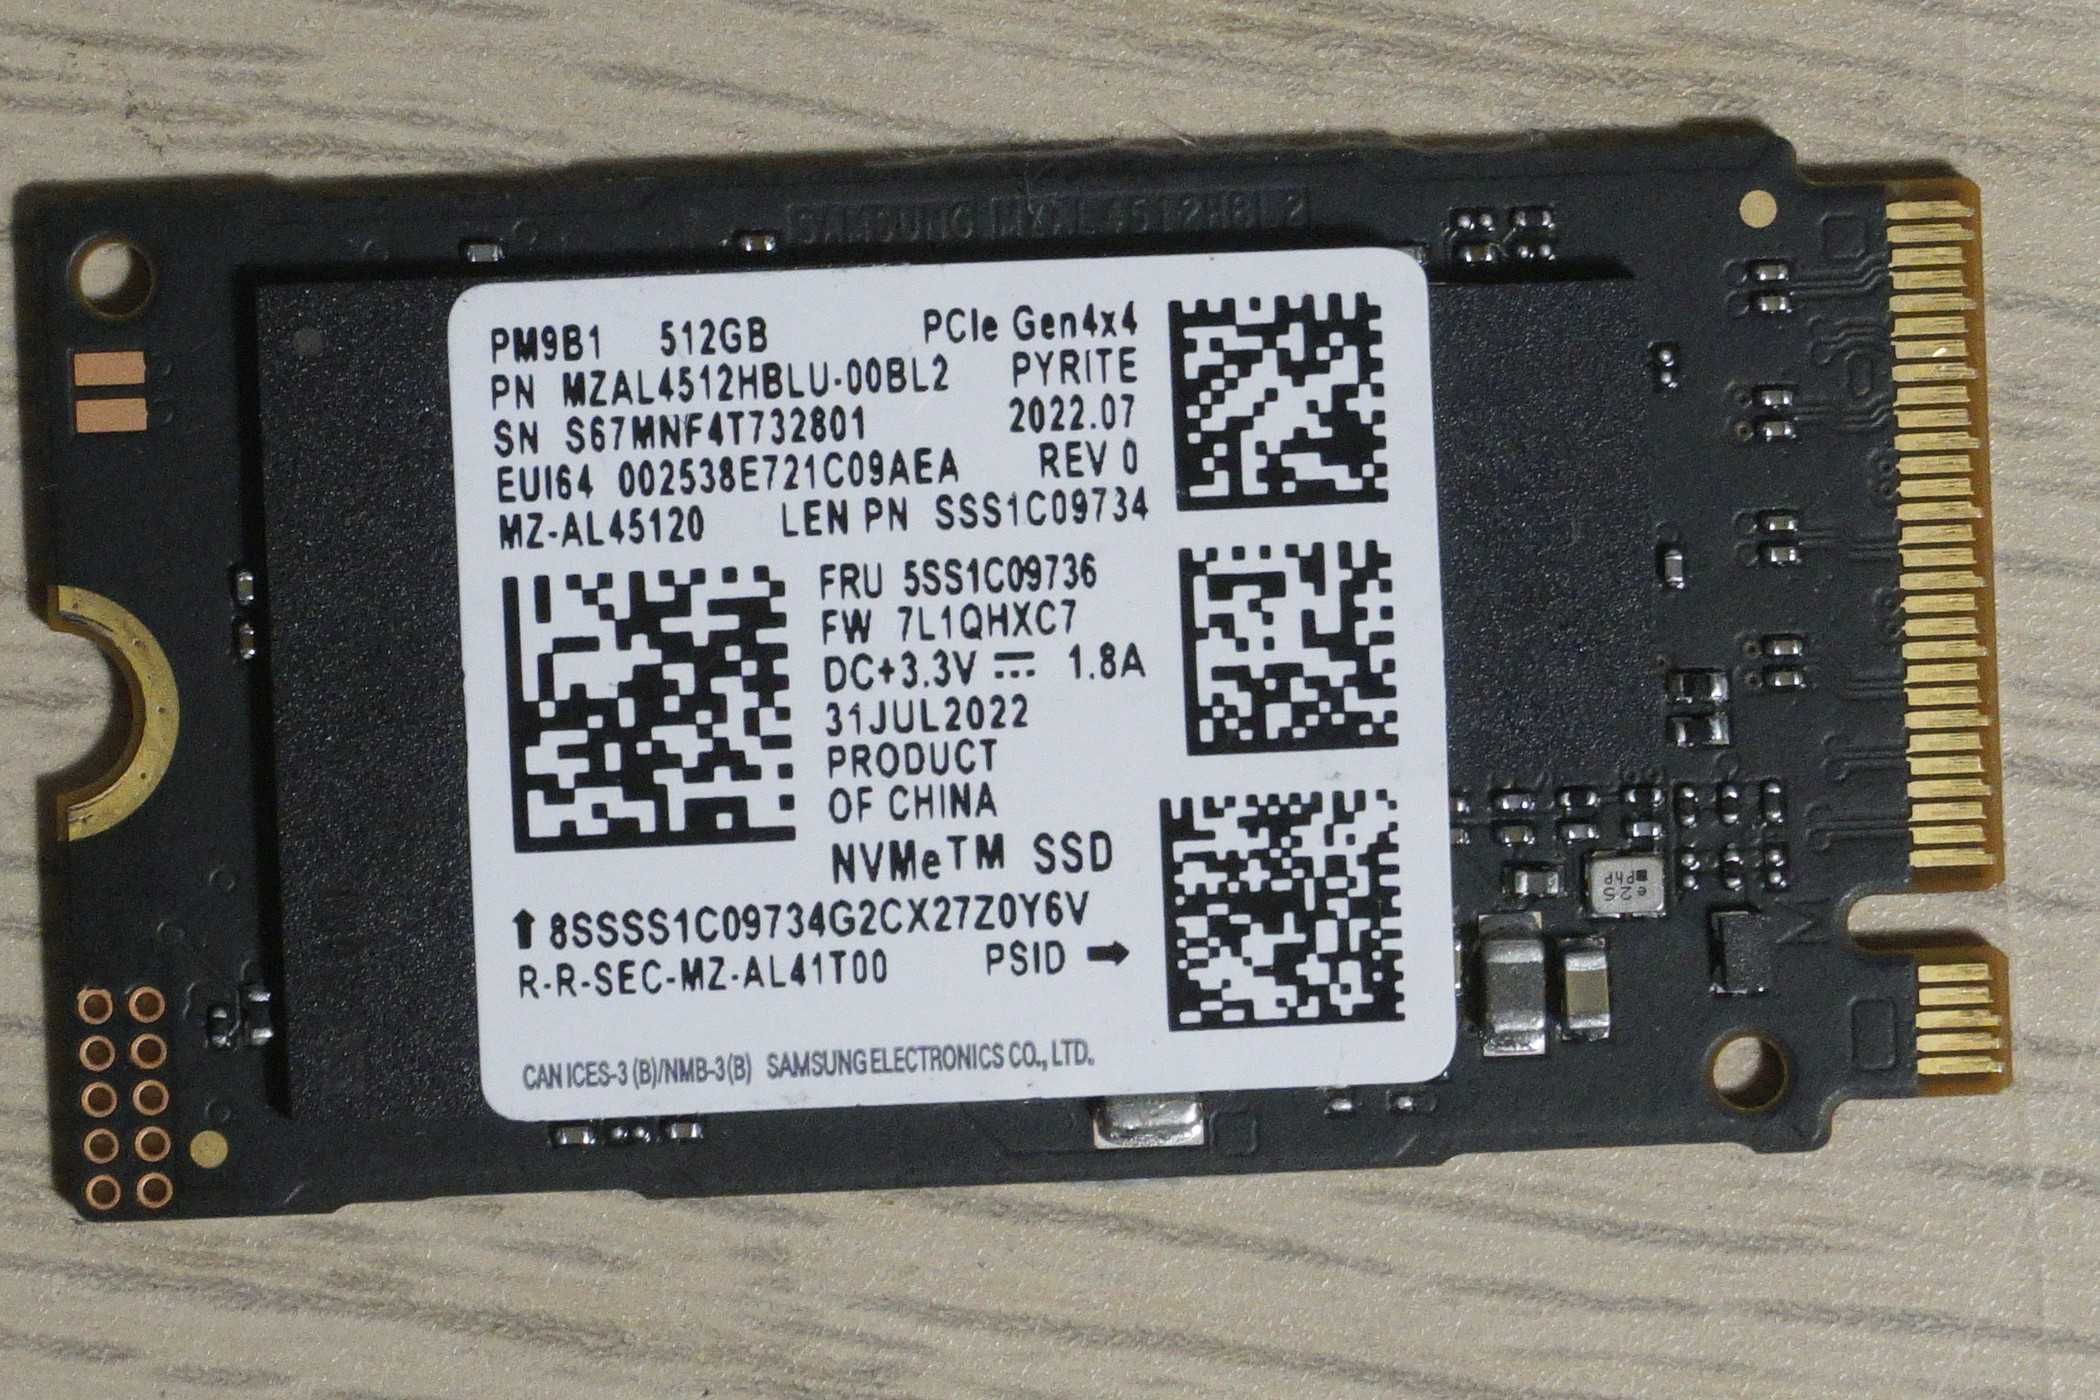 512GB Nvme m2 SSD Samsung PM9B1 2242 - gen 4, 3500/2500mbs (вкл ДДС)